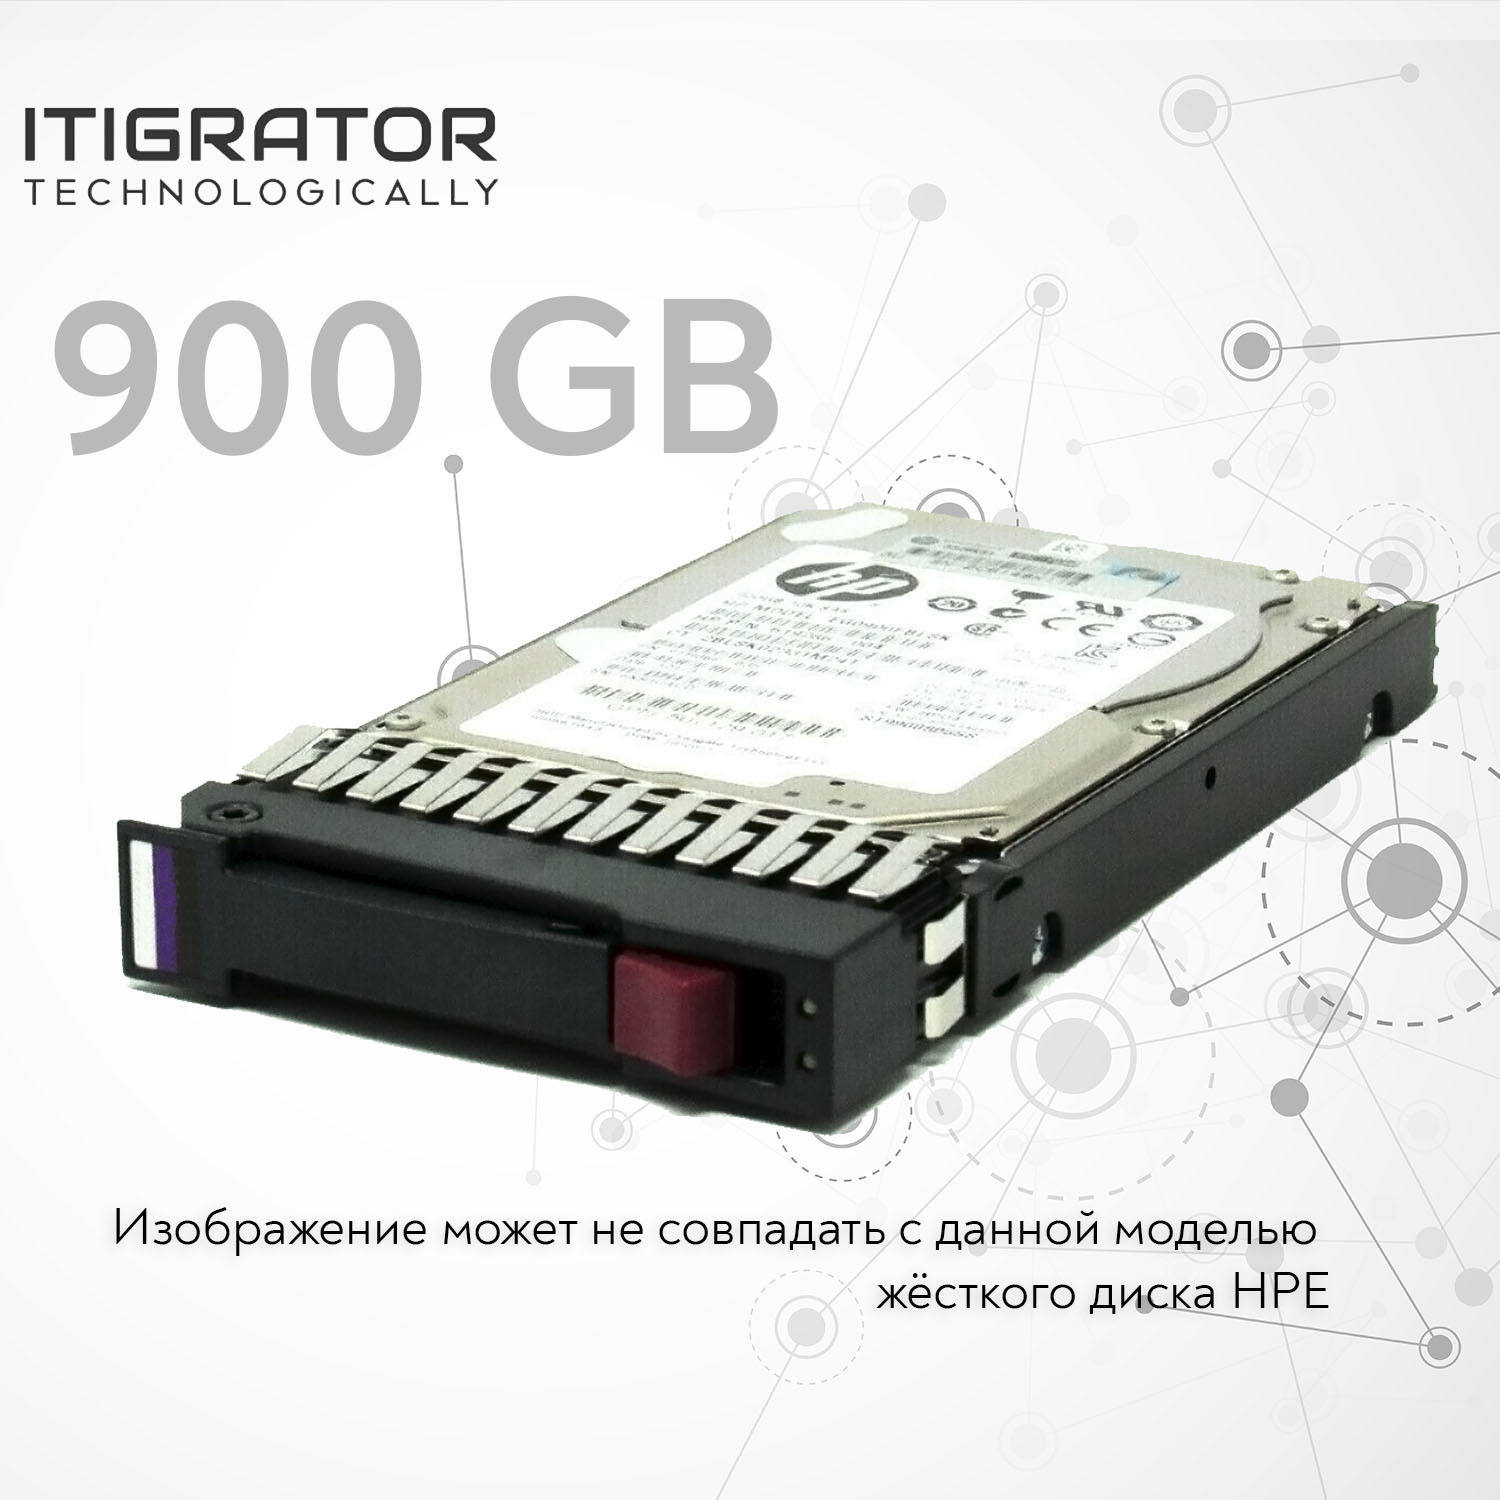 Жесткий диск HPE 900Gb [EG0900FCSPN]